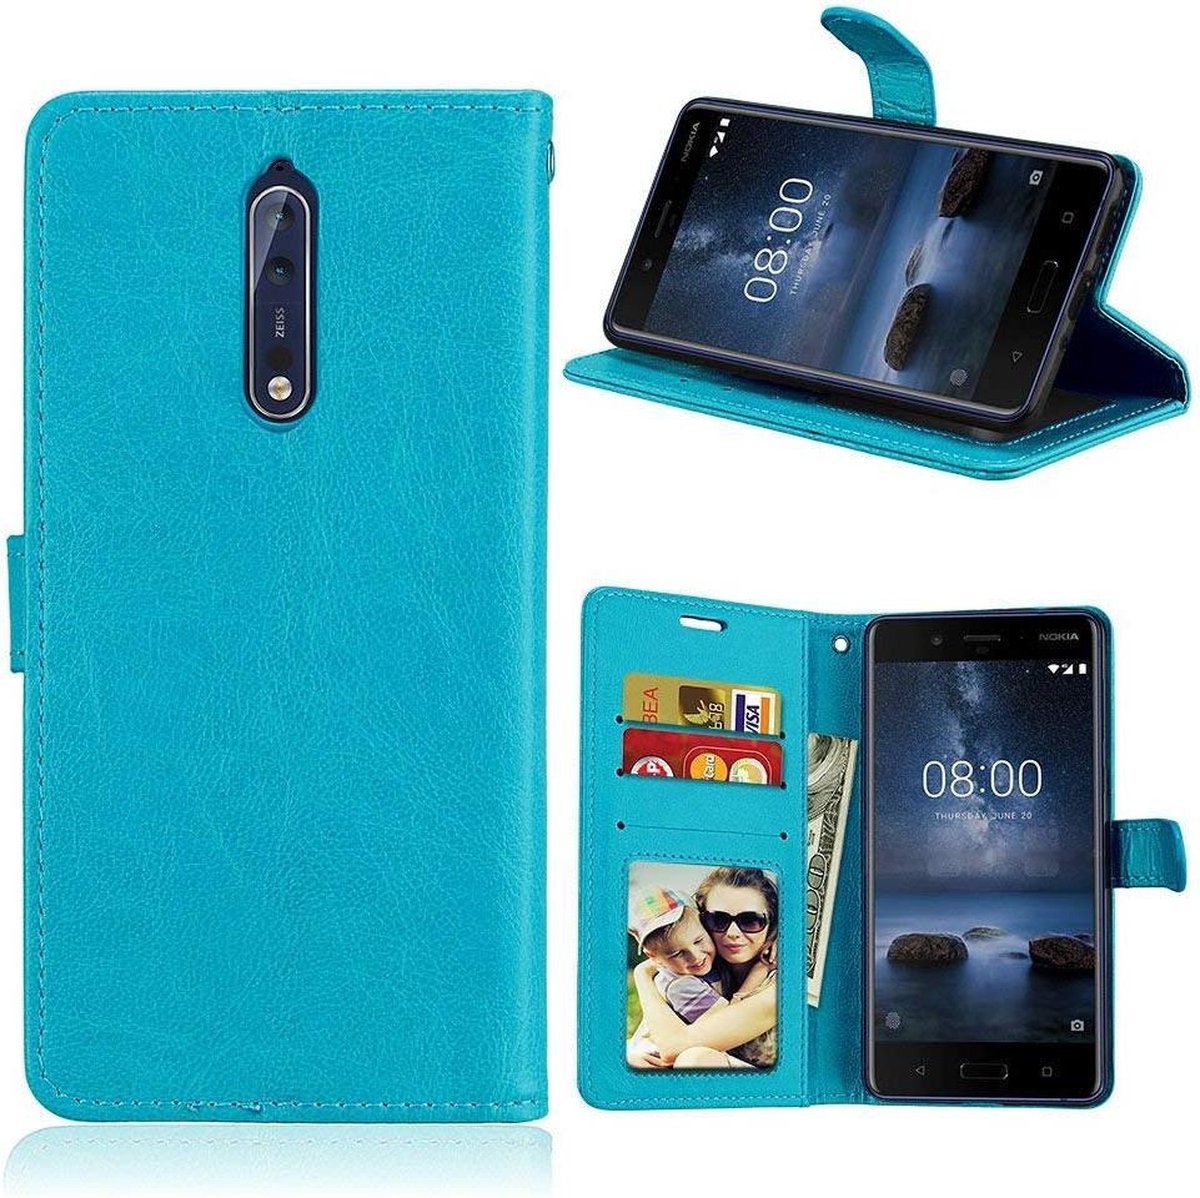 Nokia 8 portemonnee hoesje - Turquoise